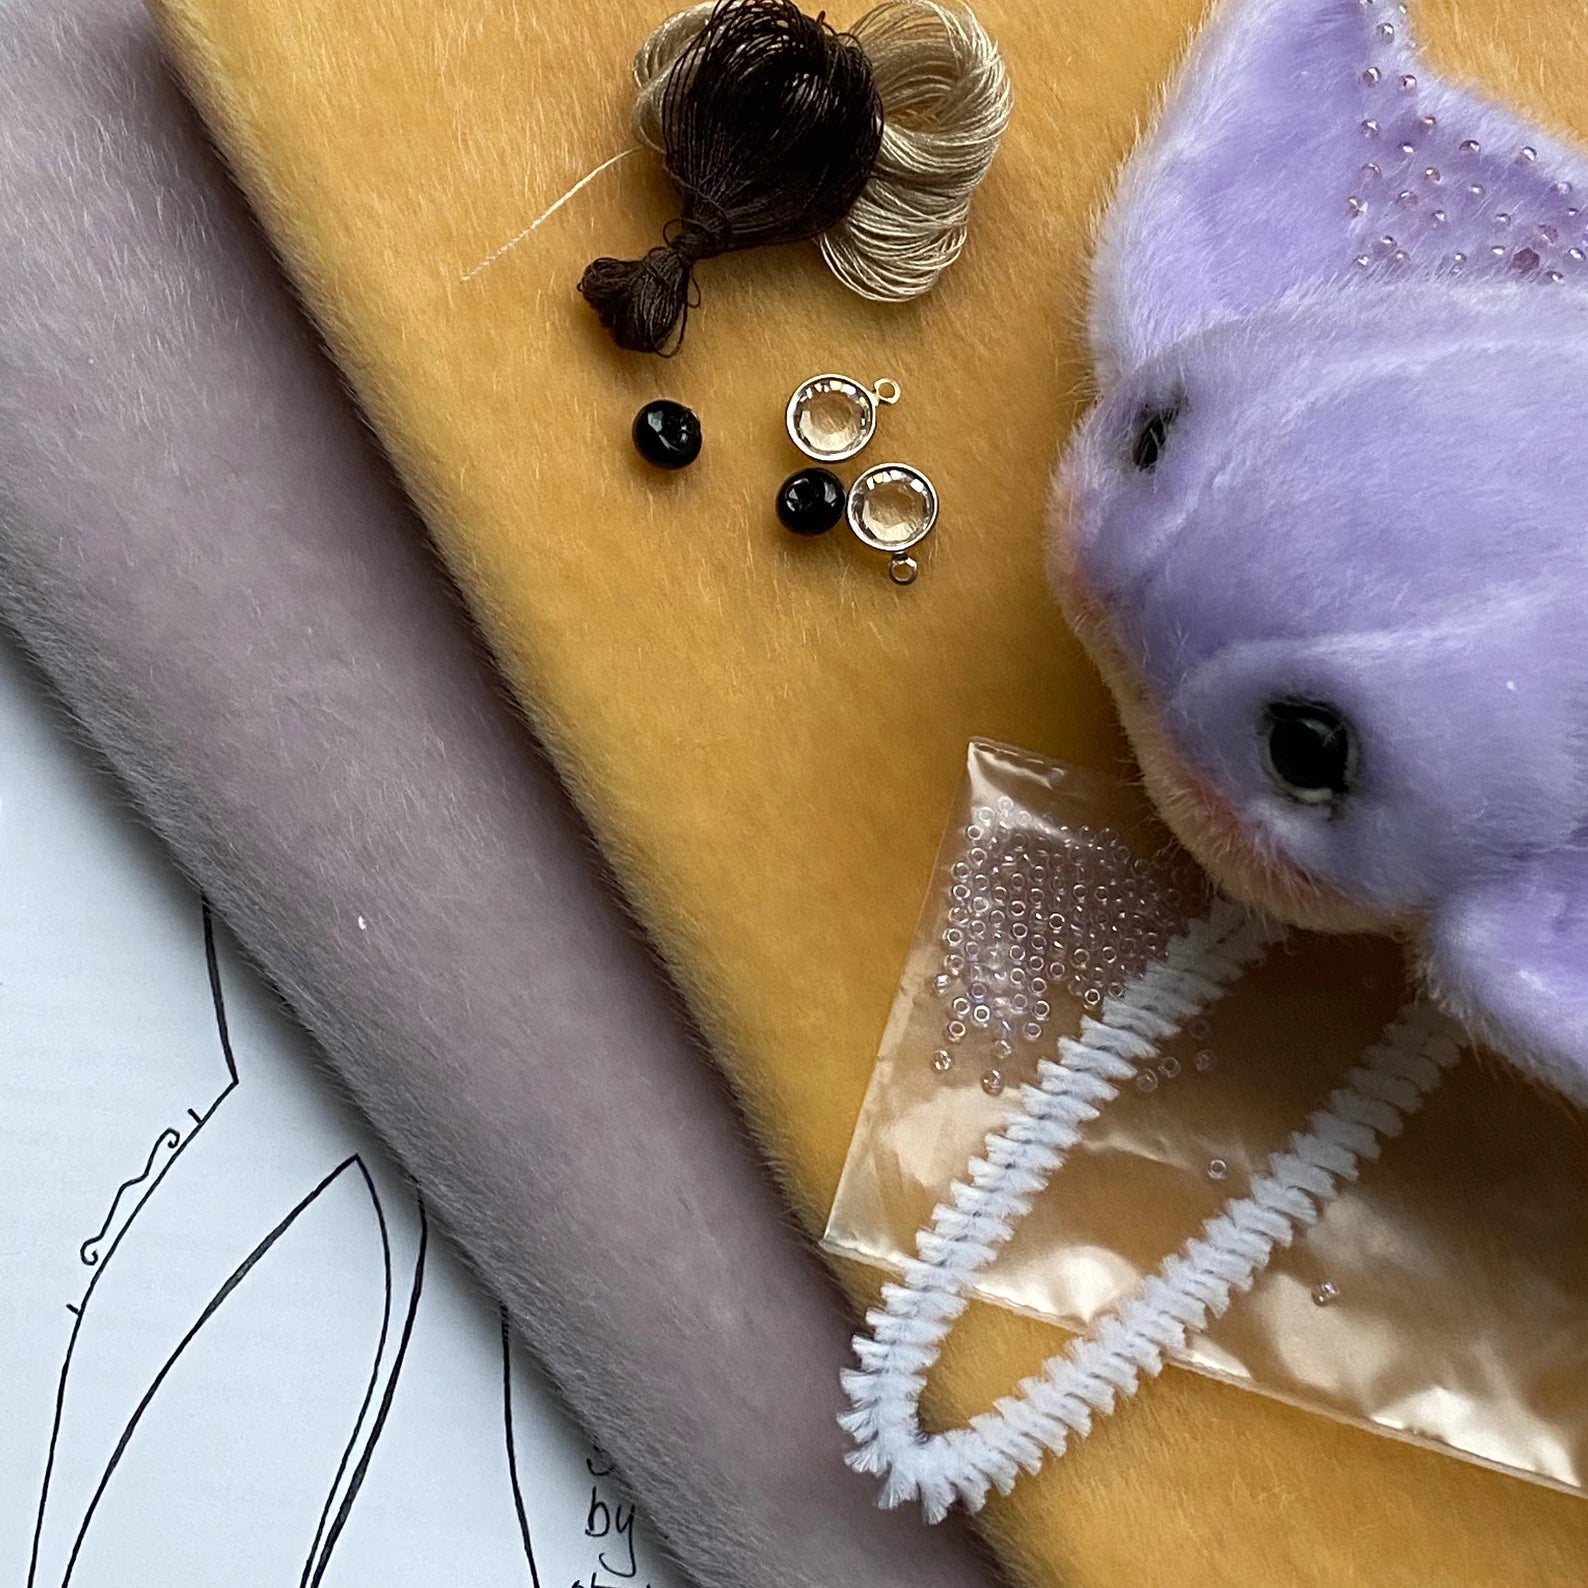 Sting Ray sewing kit (USA)